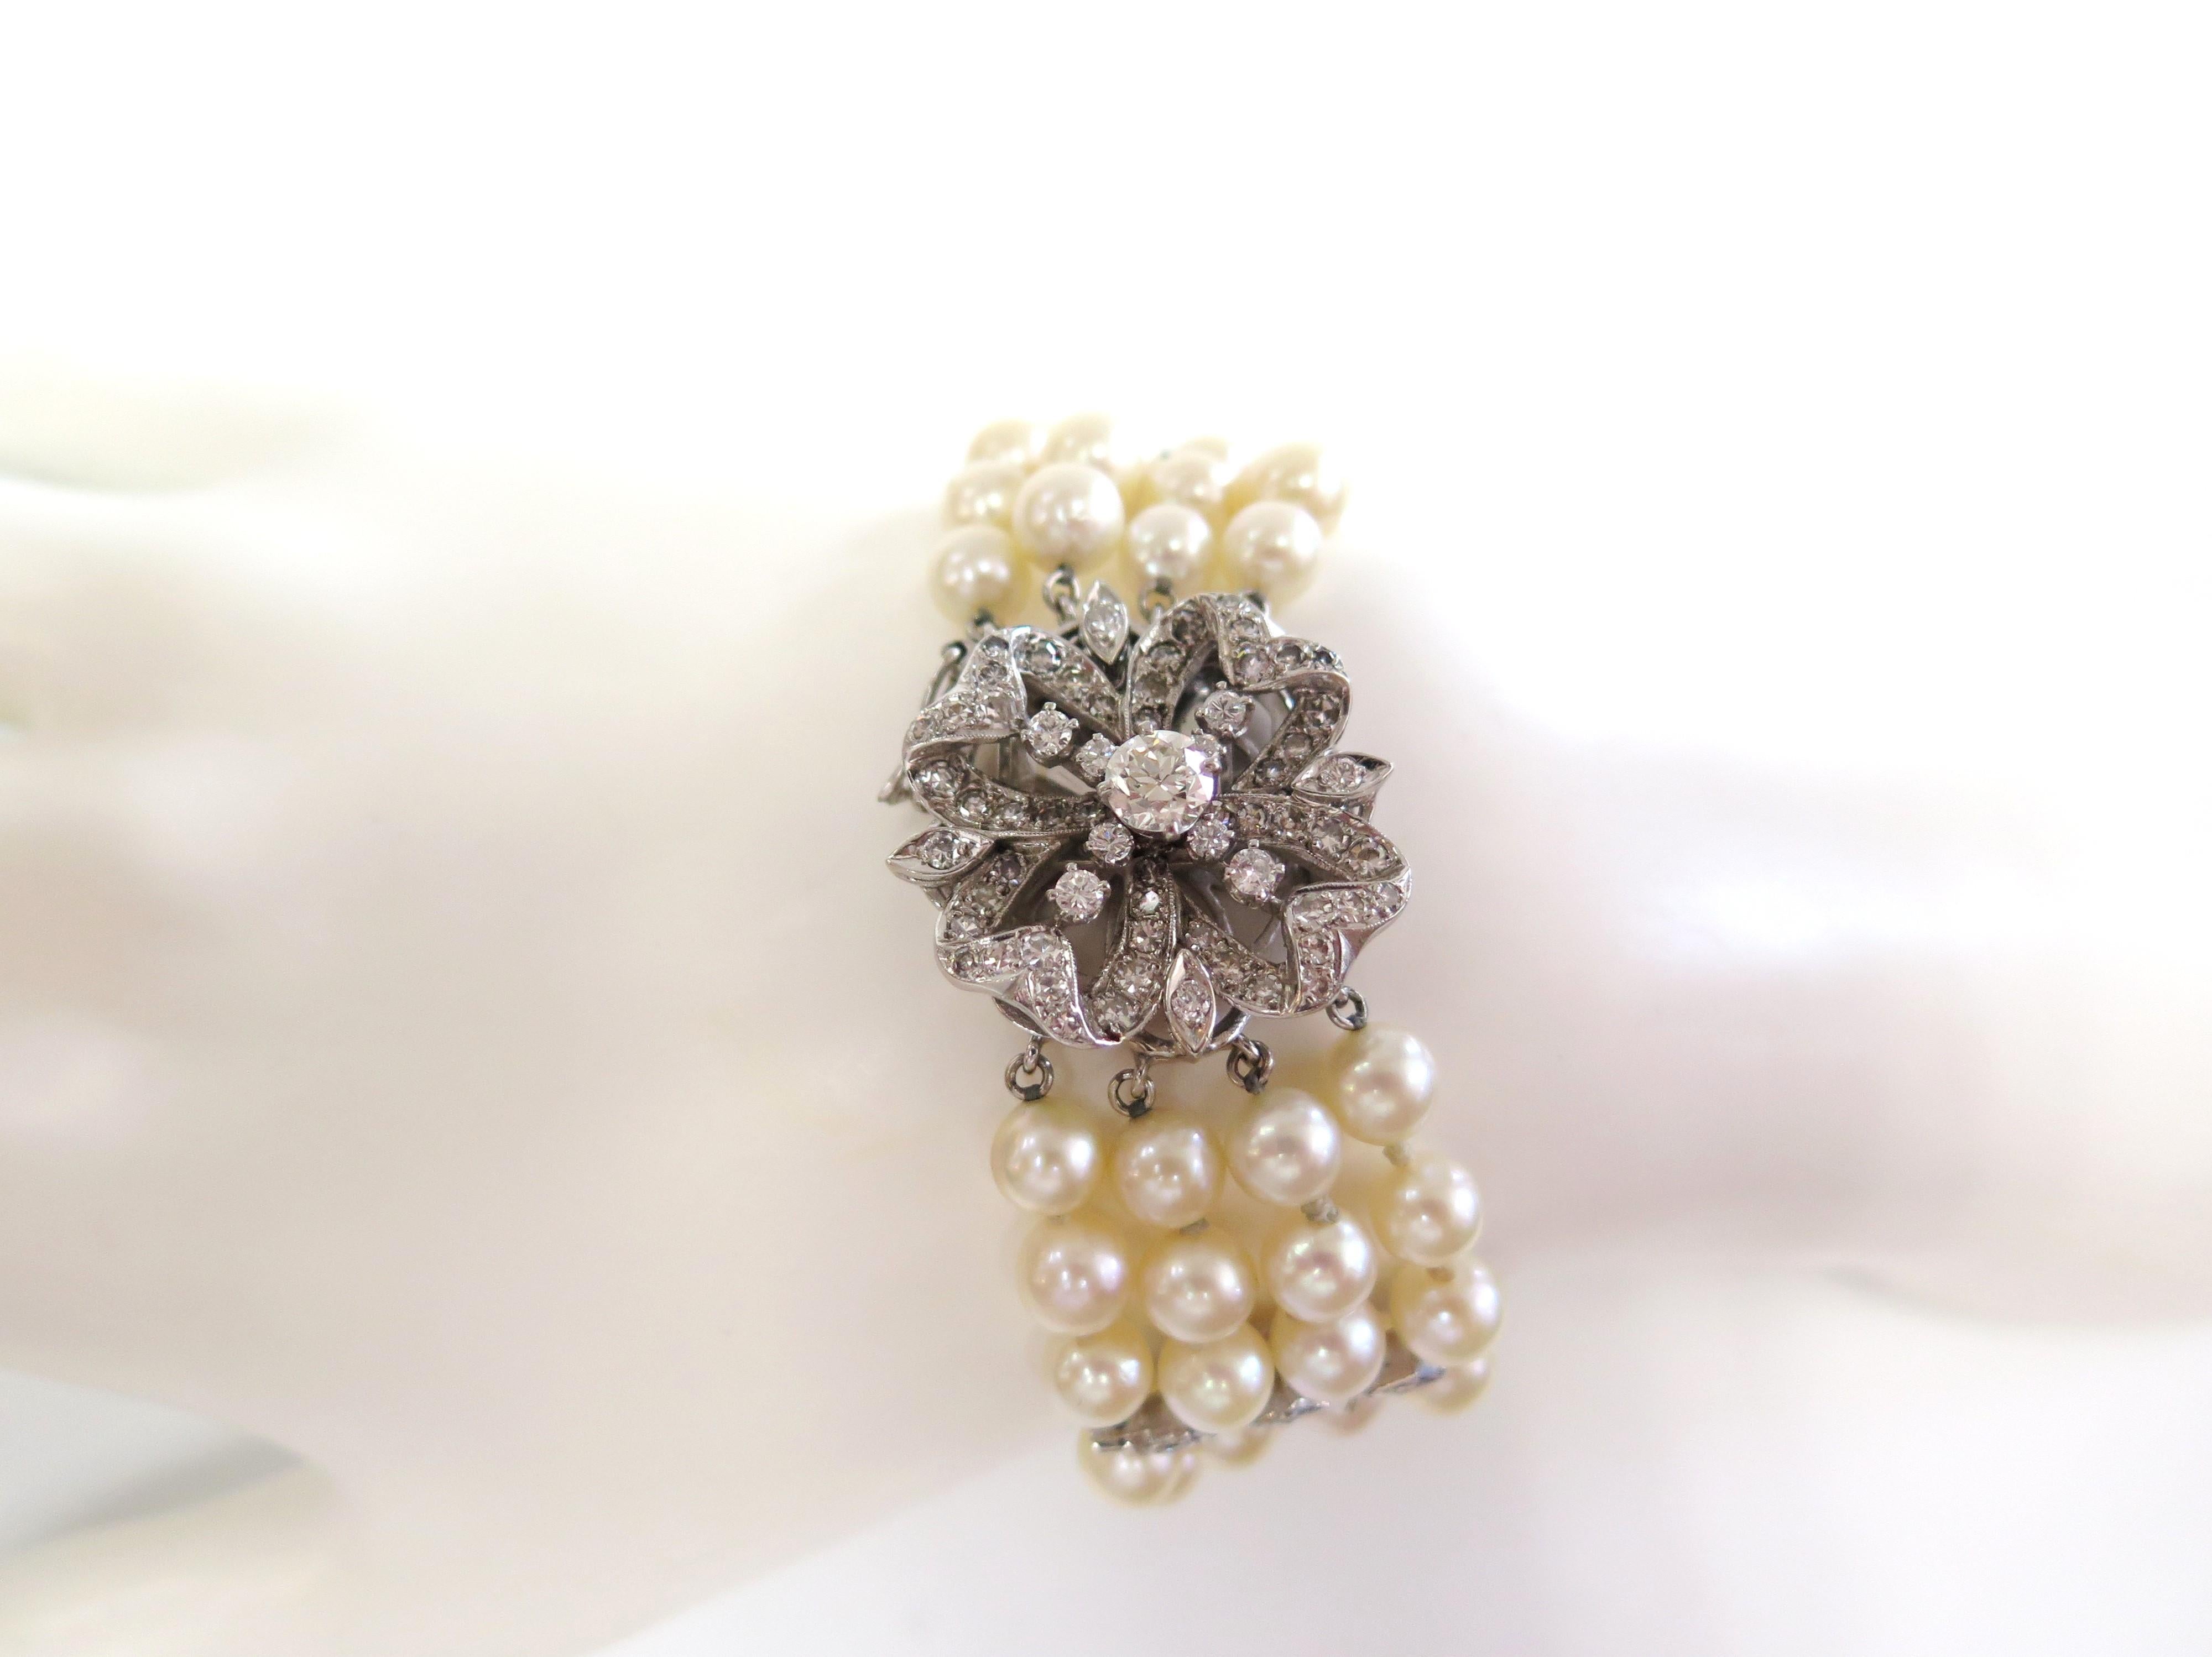 Retro Four Strand Cultured Pearl Bracelet w Diamond Clasp - 2.50 Carats total / 14k